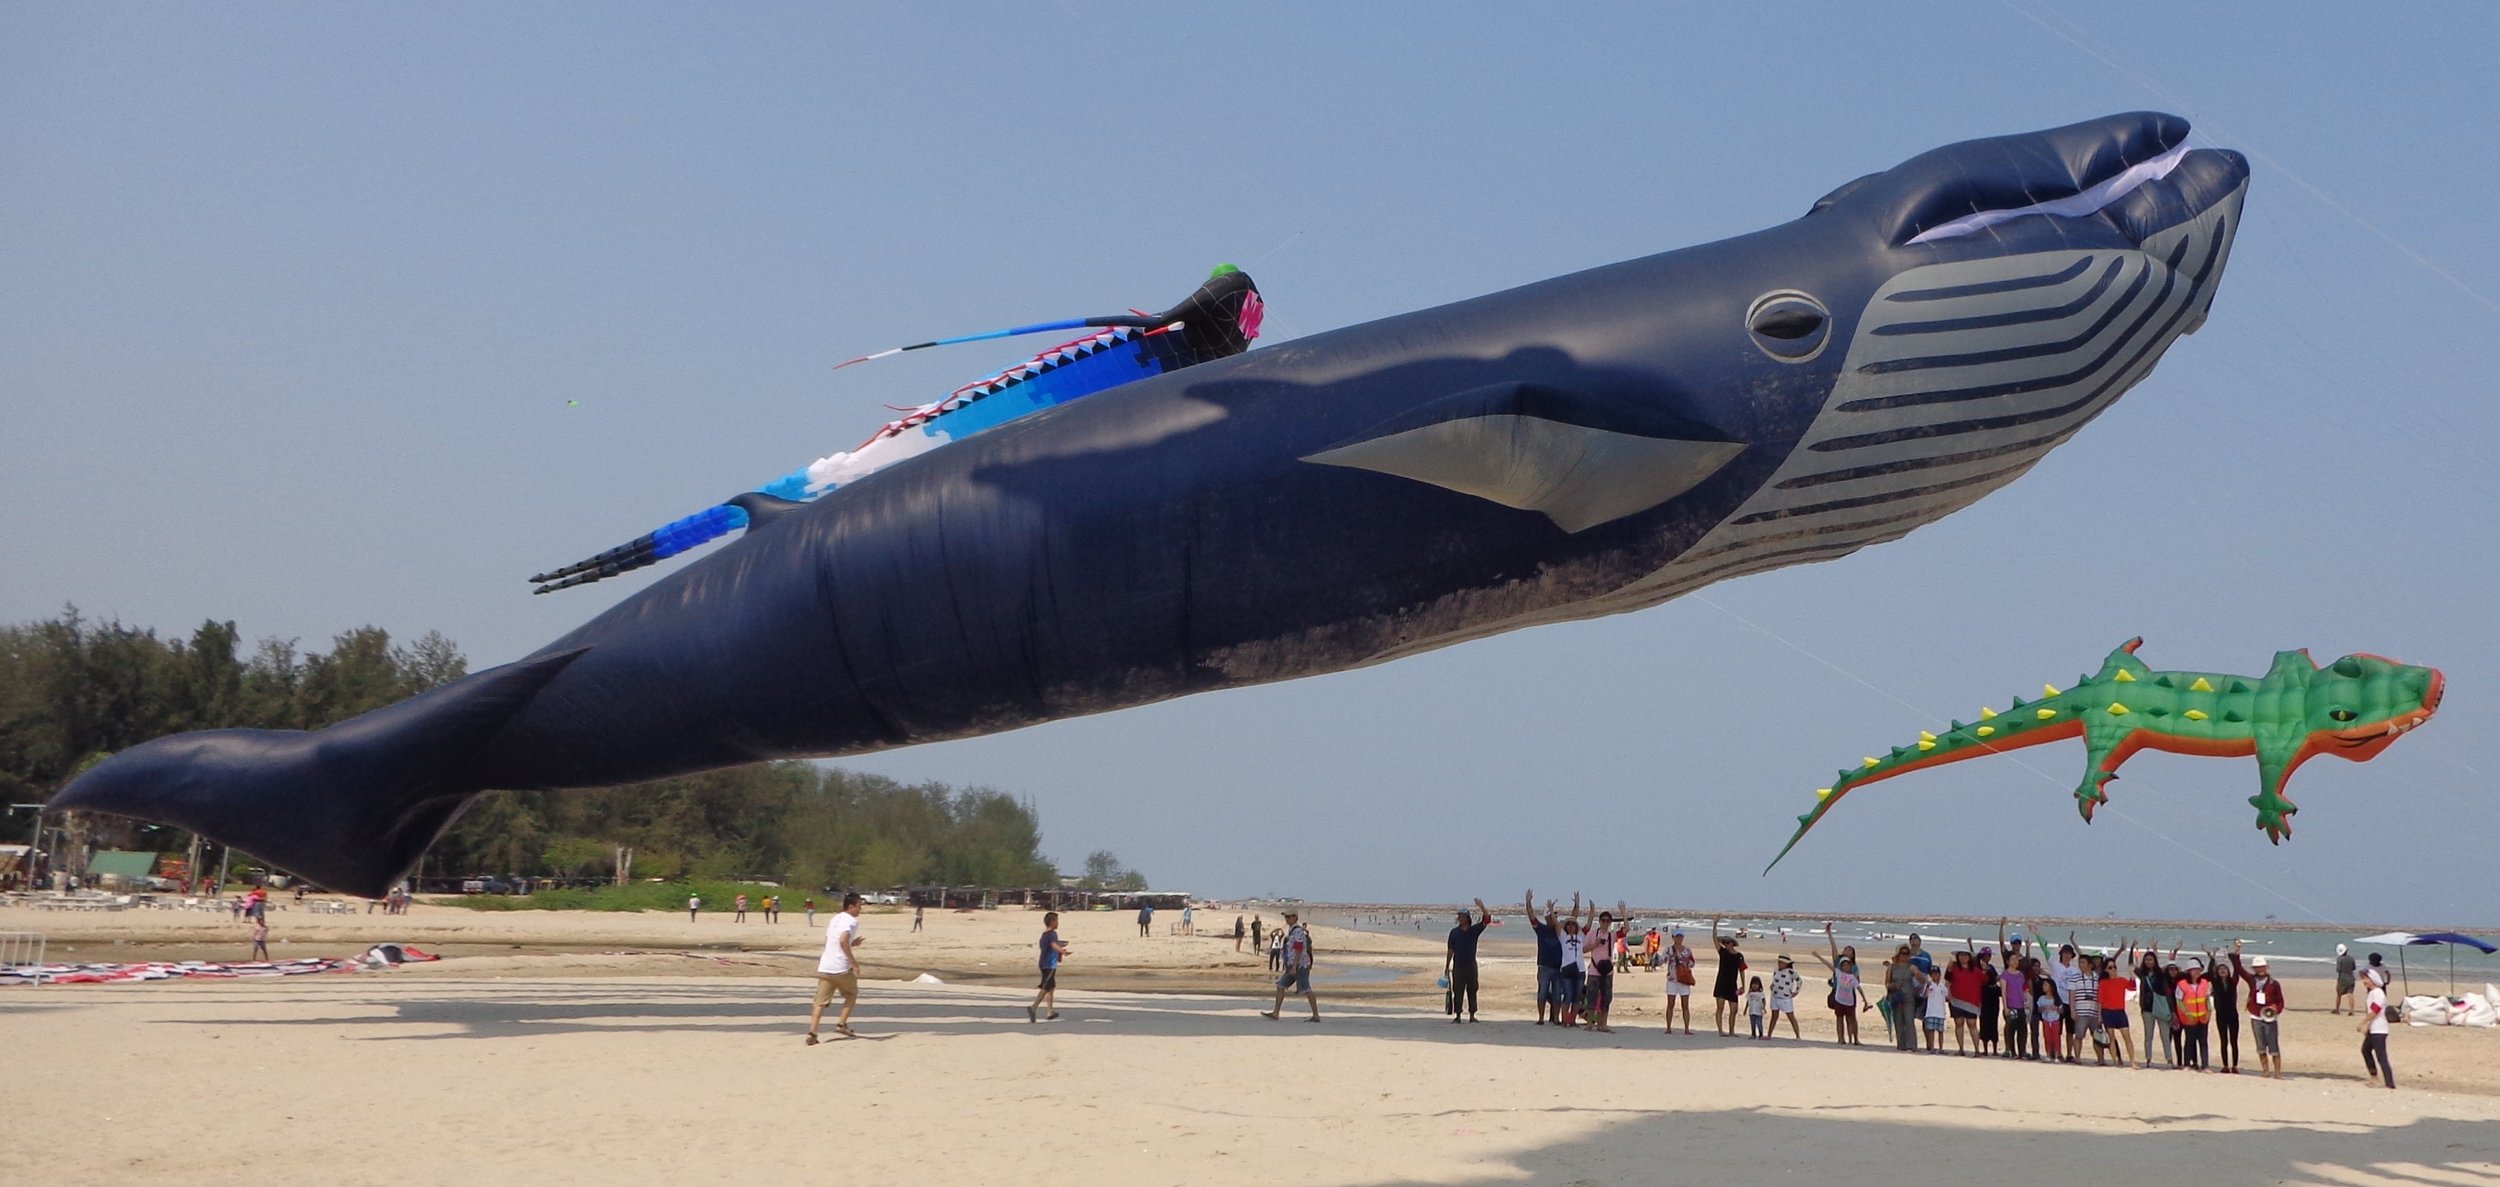 30-meter-Blue-Whale-in-Thailand.jpg